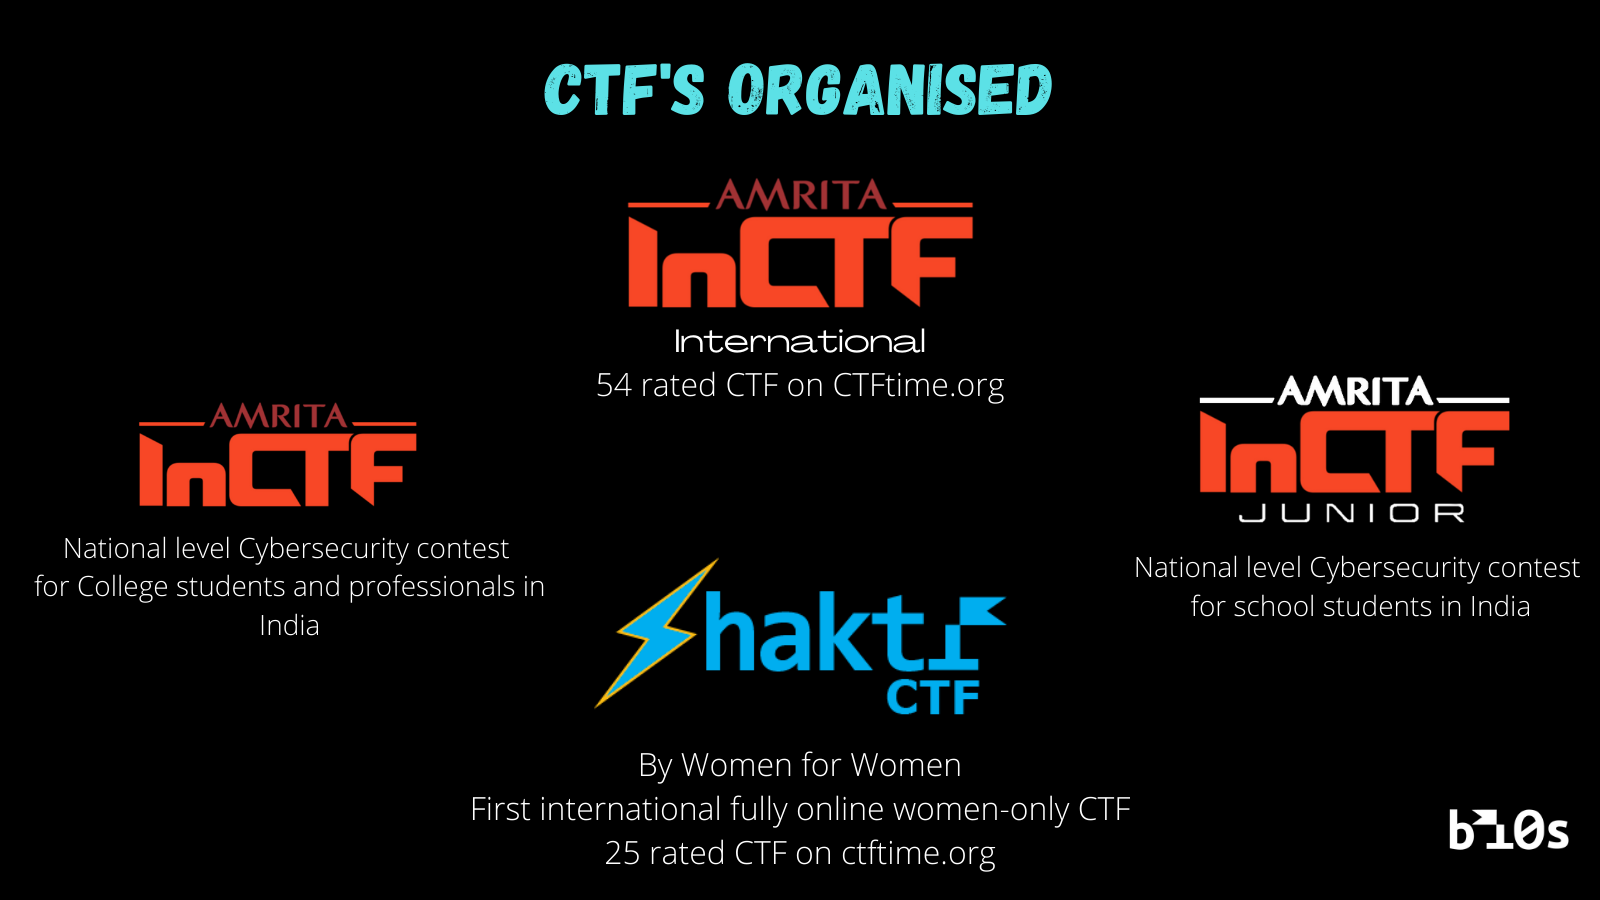 CTF's Organized